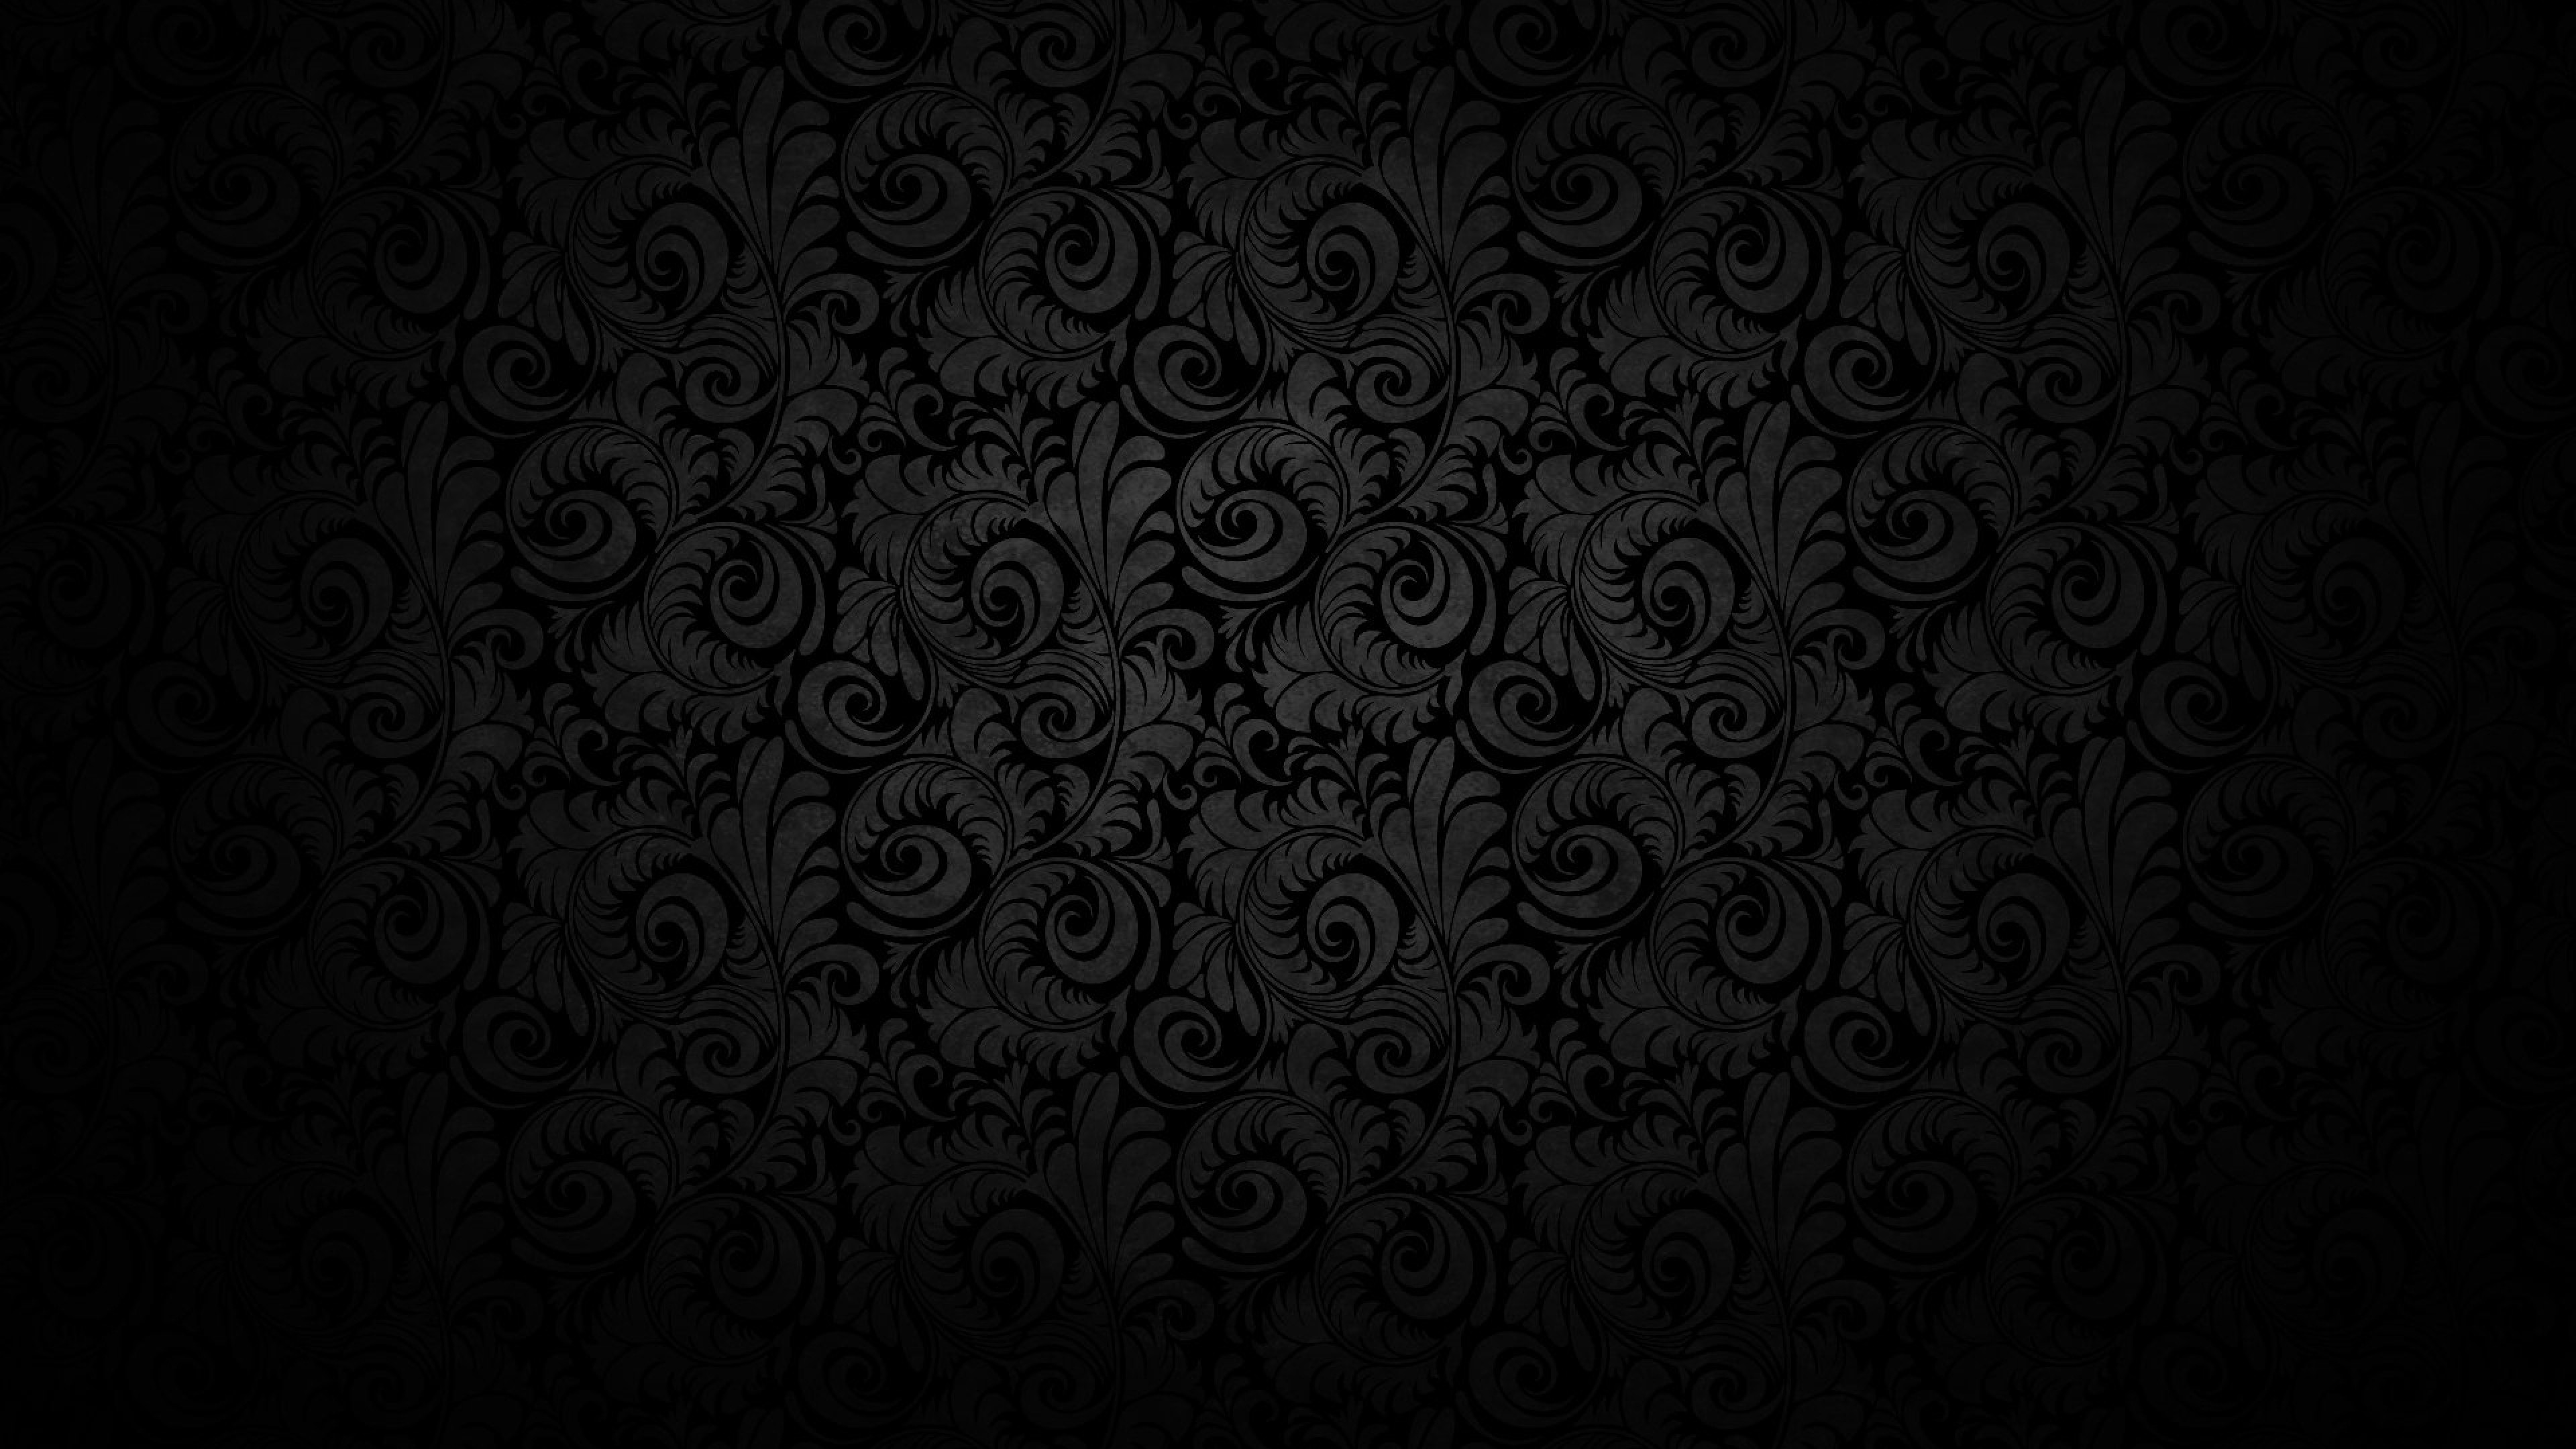  Black  wallpaper    Download free amazing full HD  